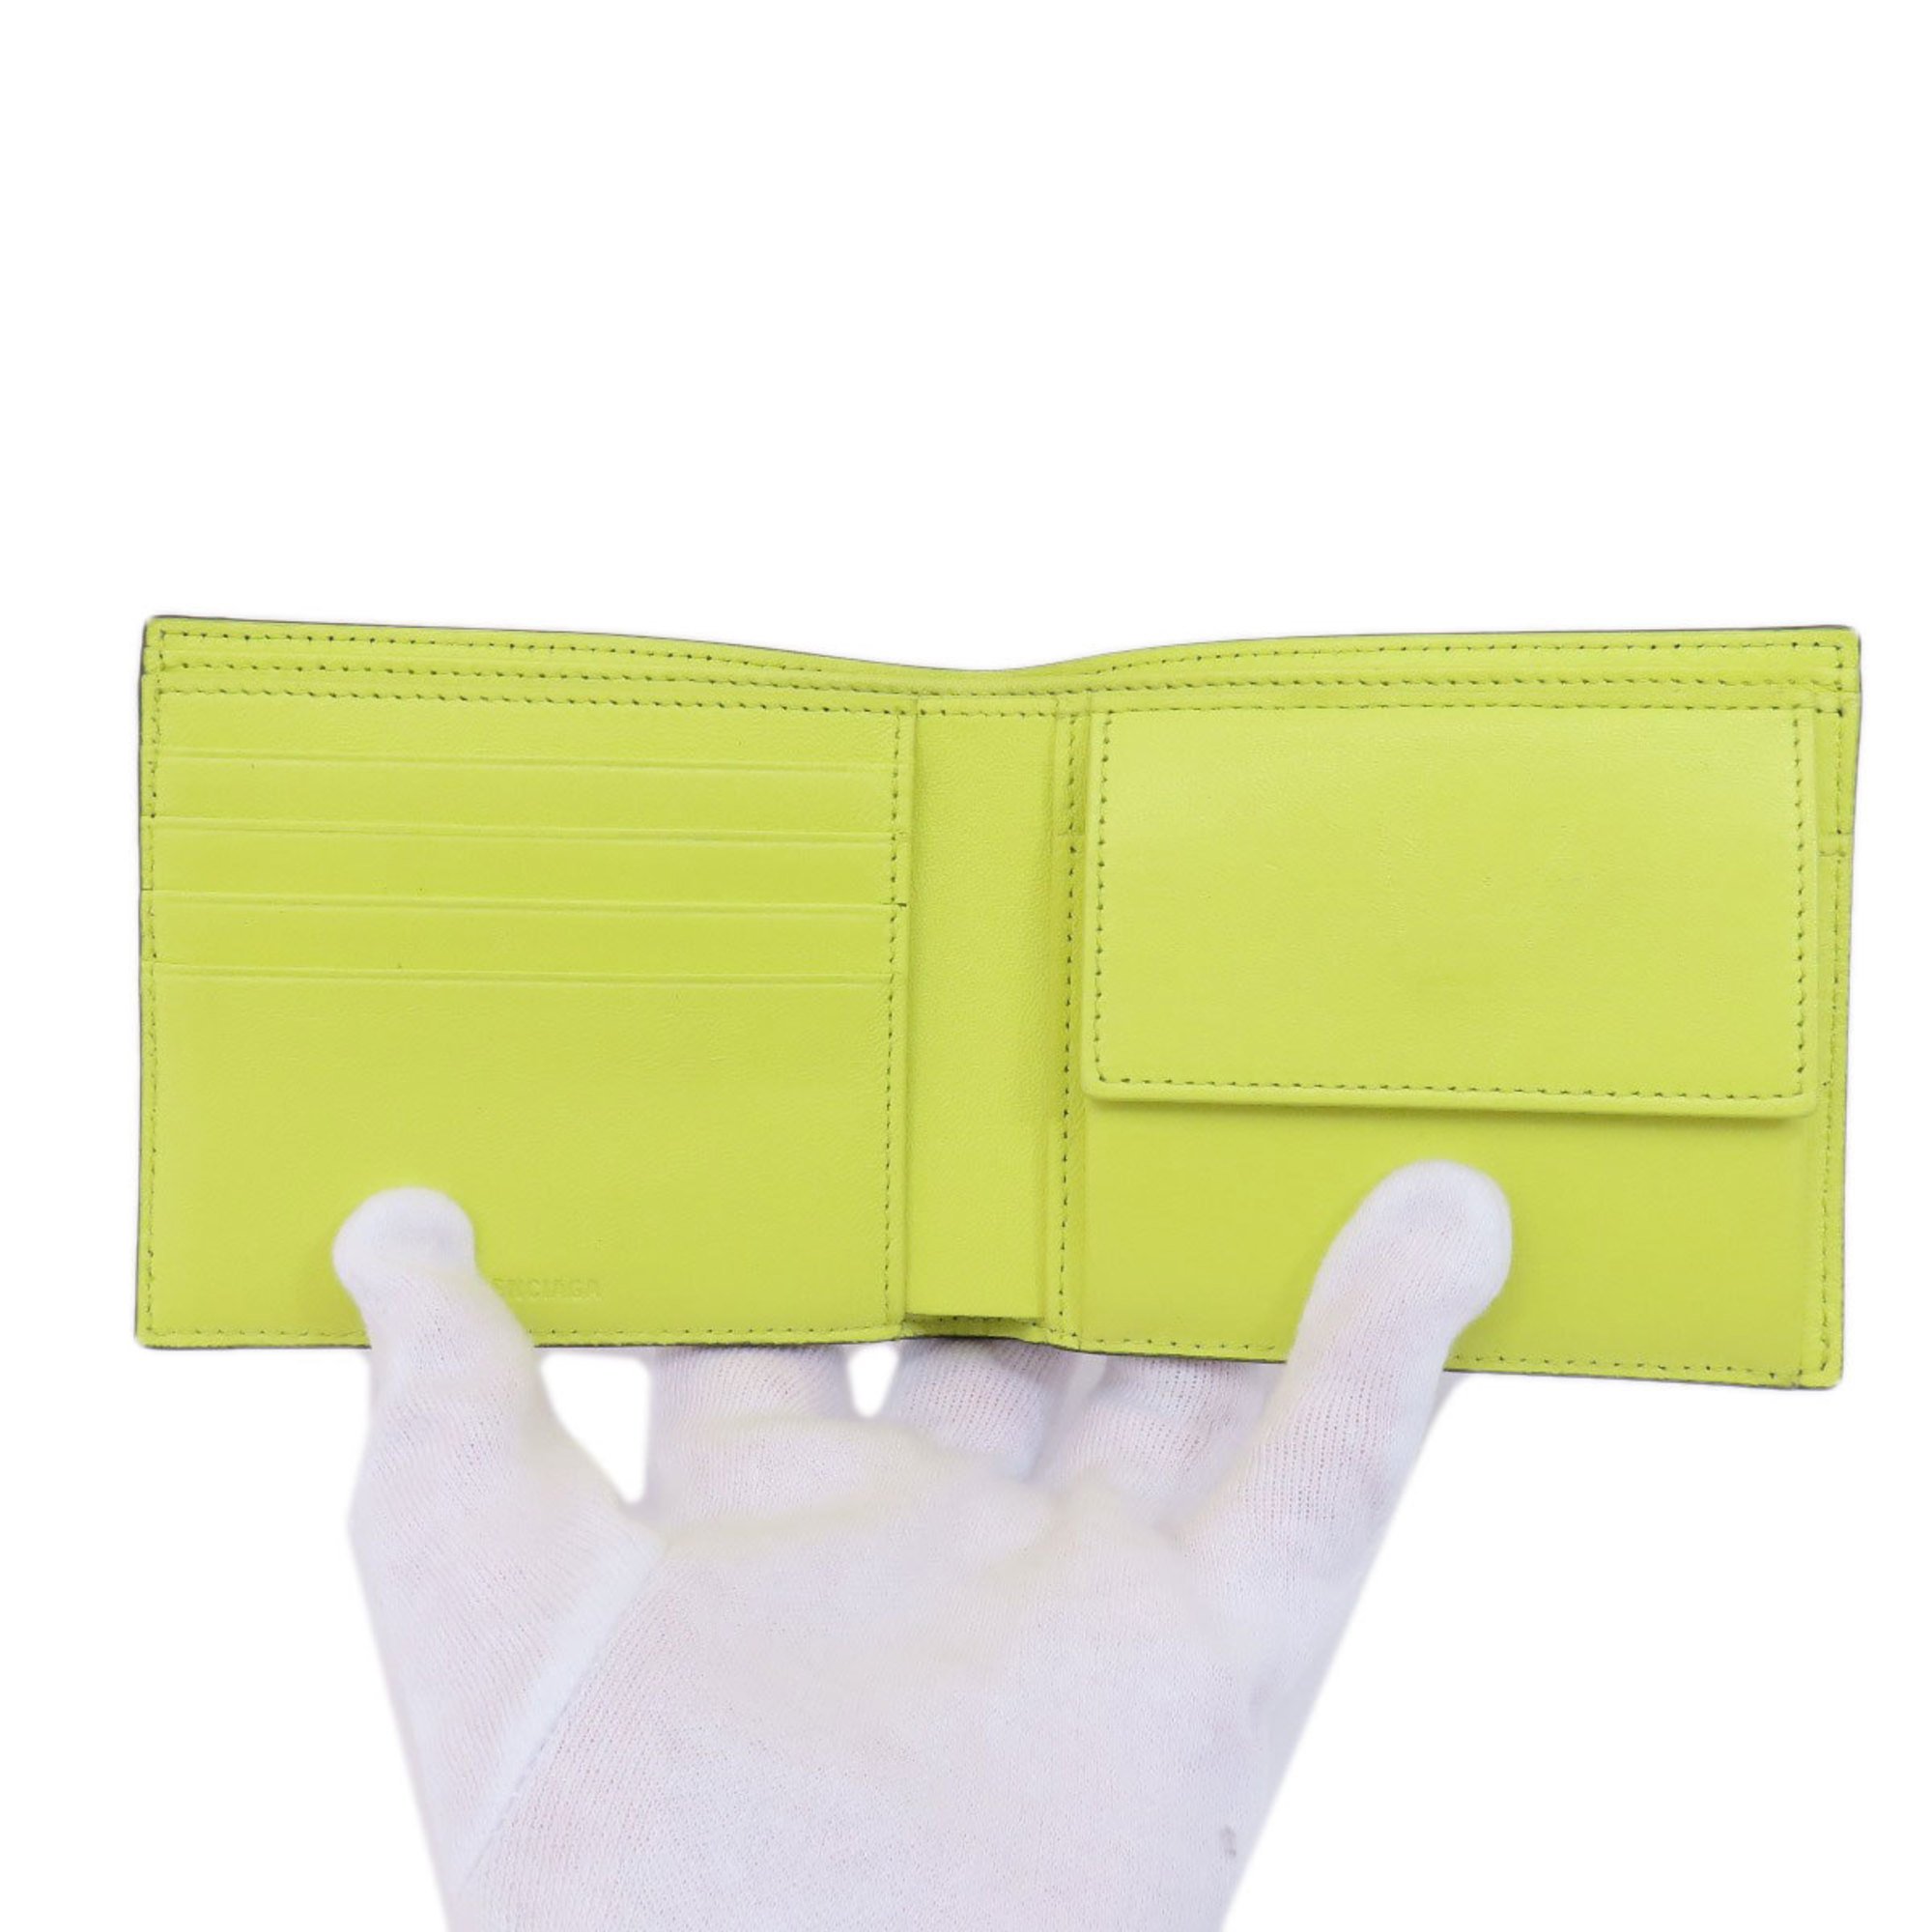 BALENCIAGA 664038 Bi-fold wallet Leather Women's